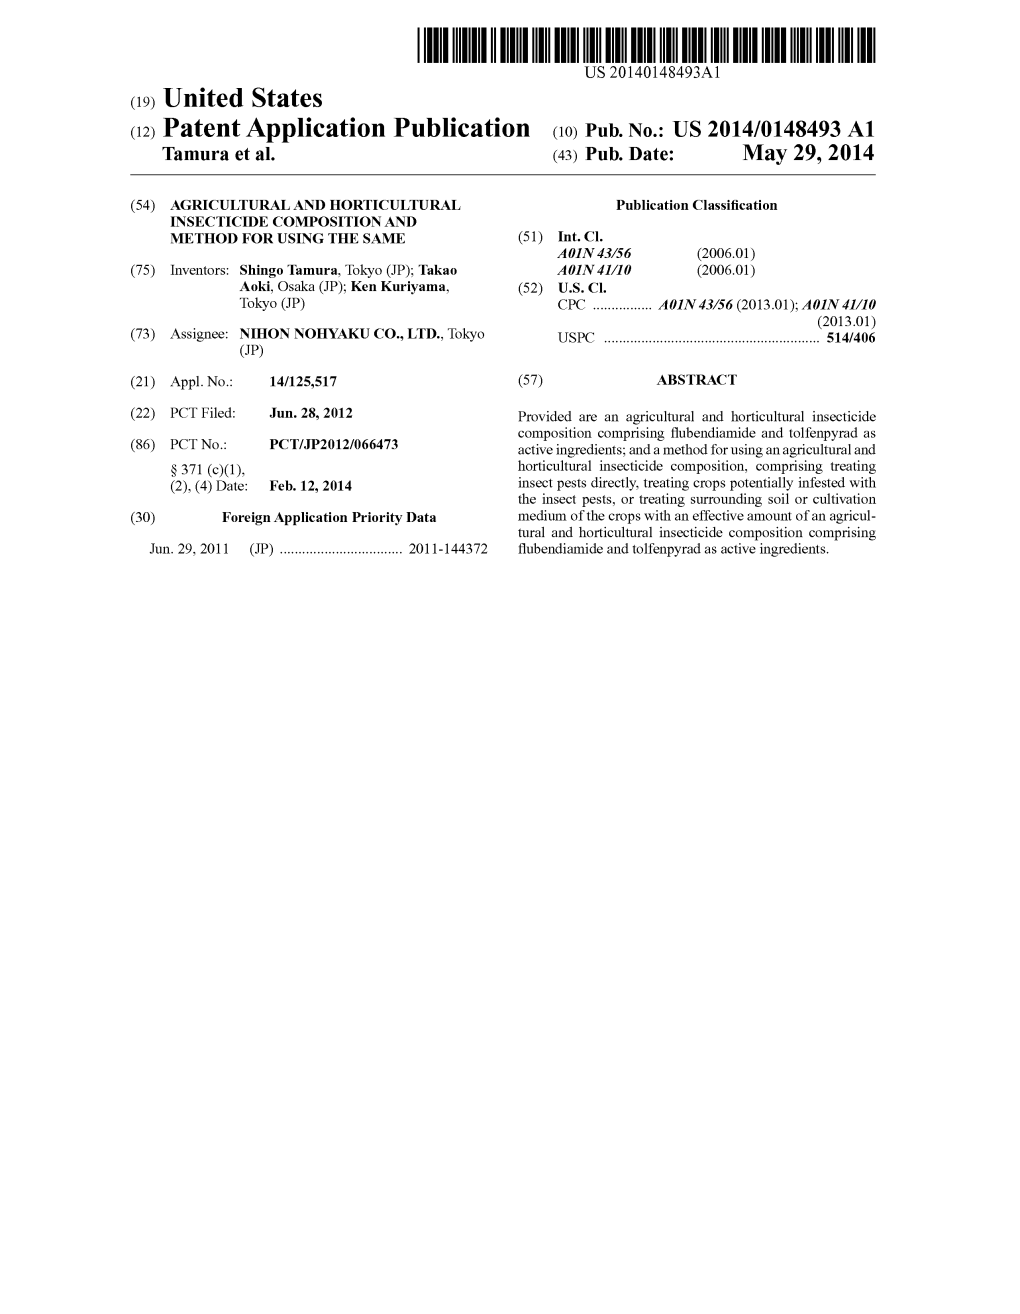 (12) Patent Application Publication (10) Pub. No.: US 2014/0148493 A1 Tamura Et Al